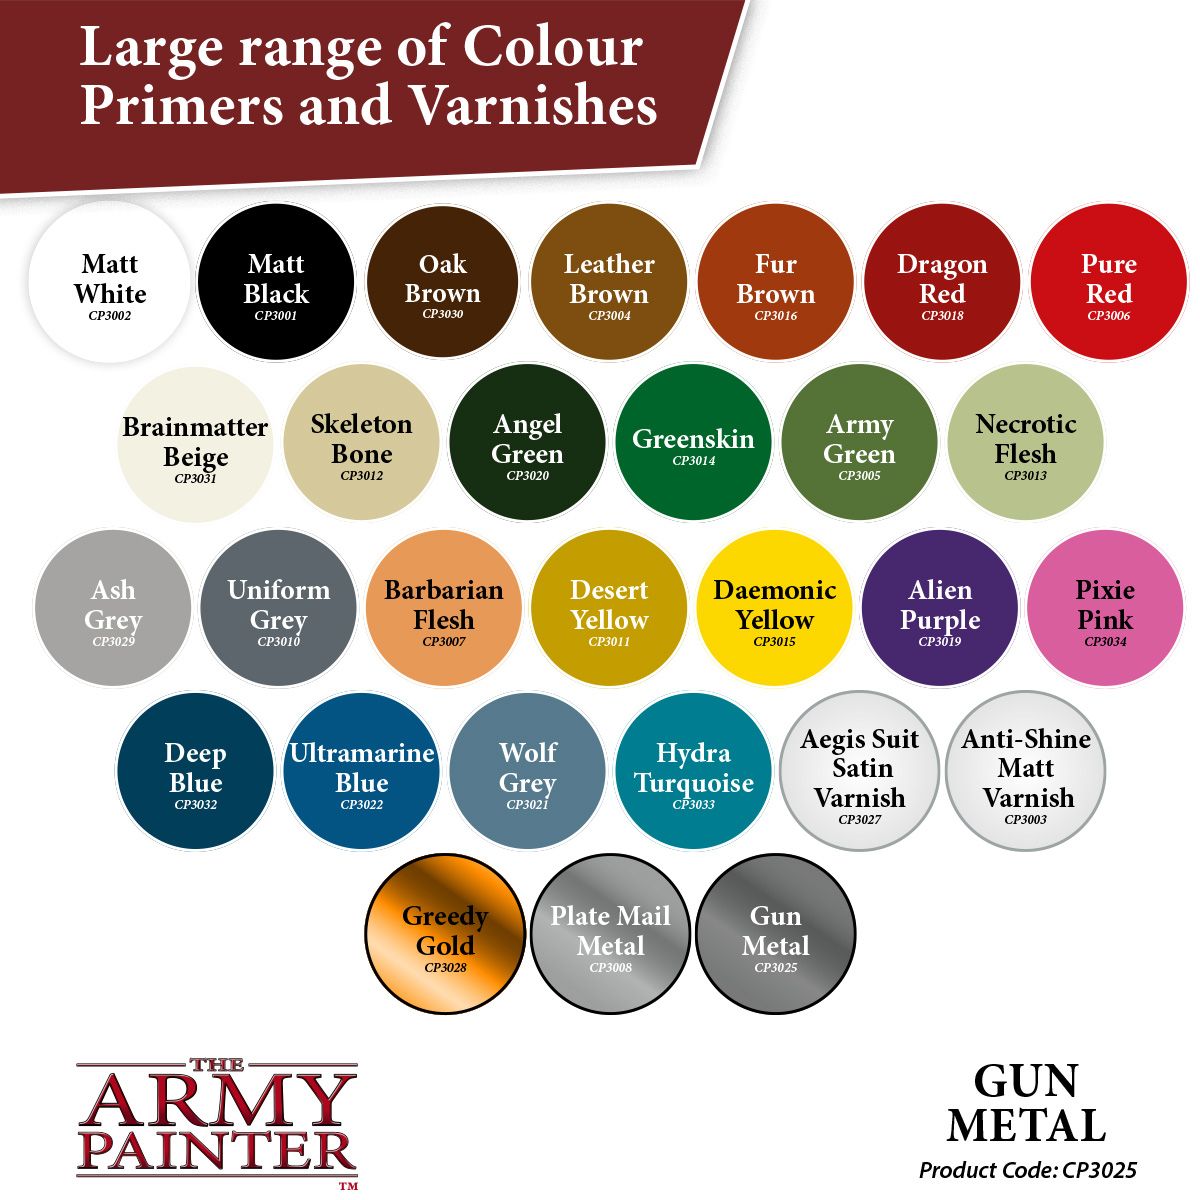 The Army Painter - Colour Primer: Gun Metal (400ml/13.5oz)